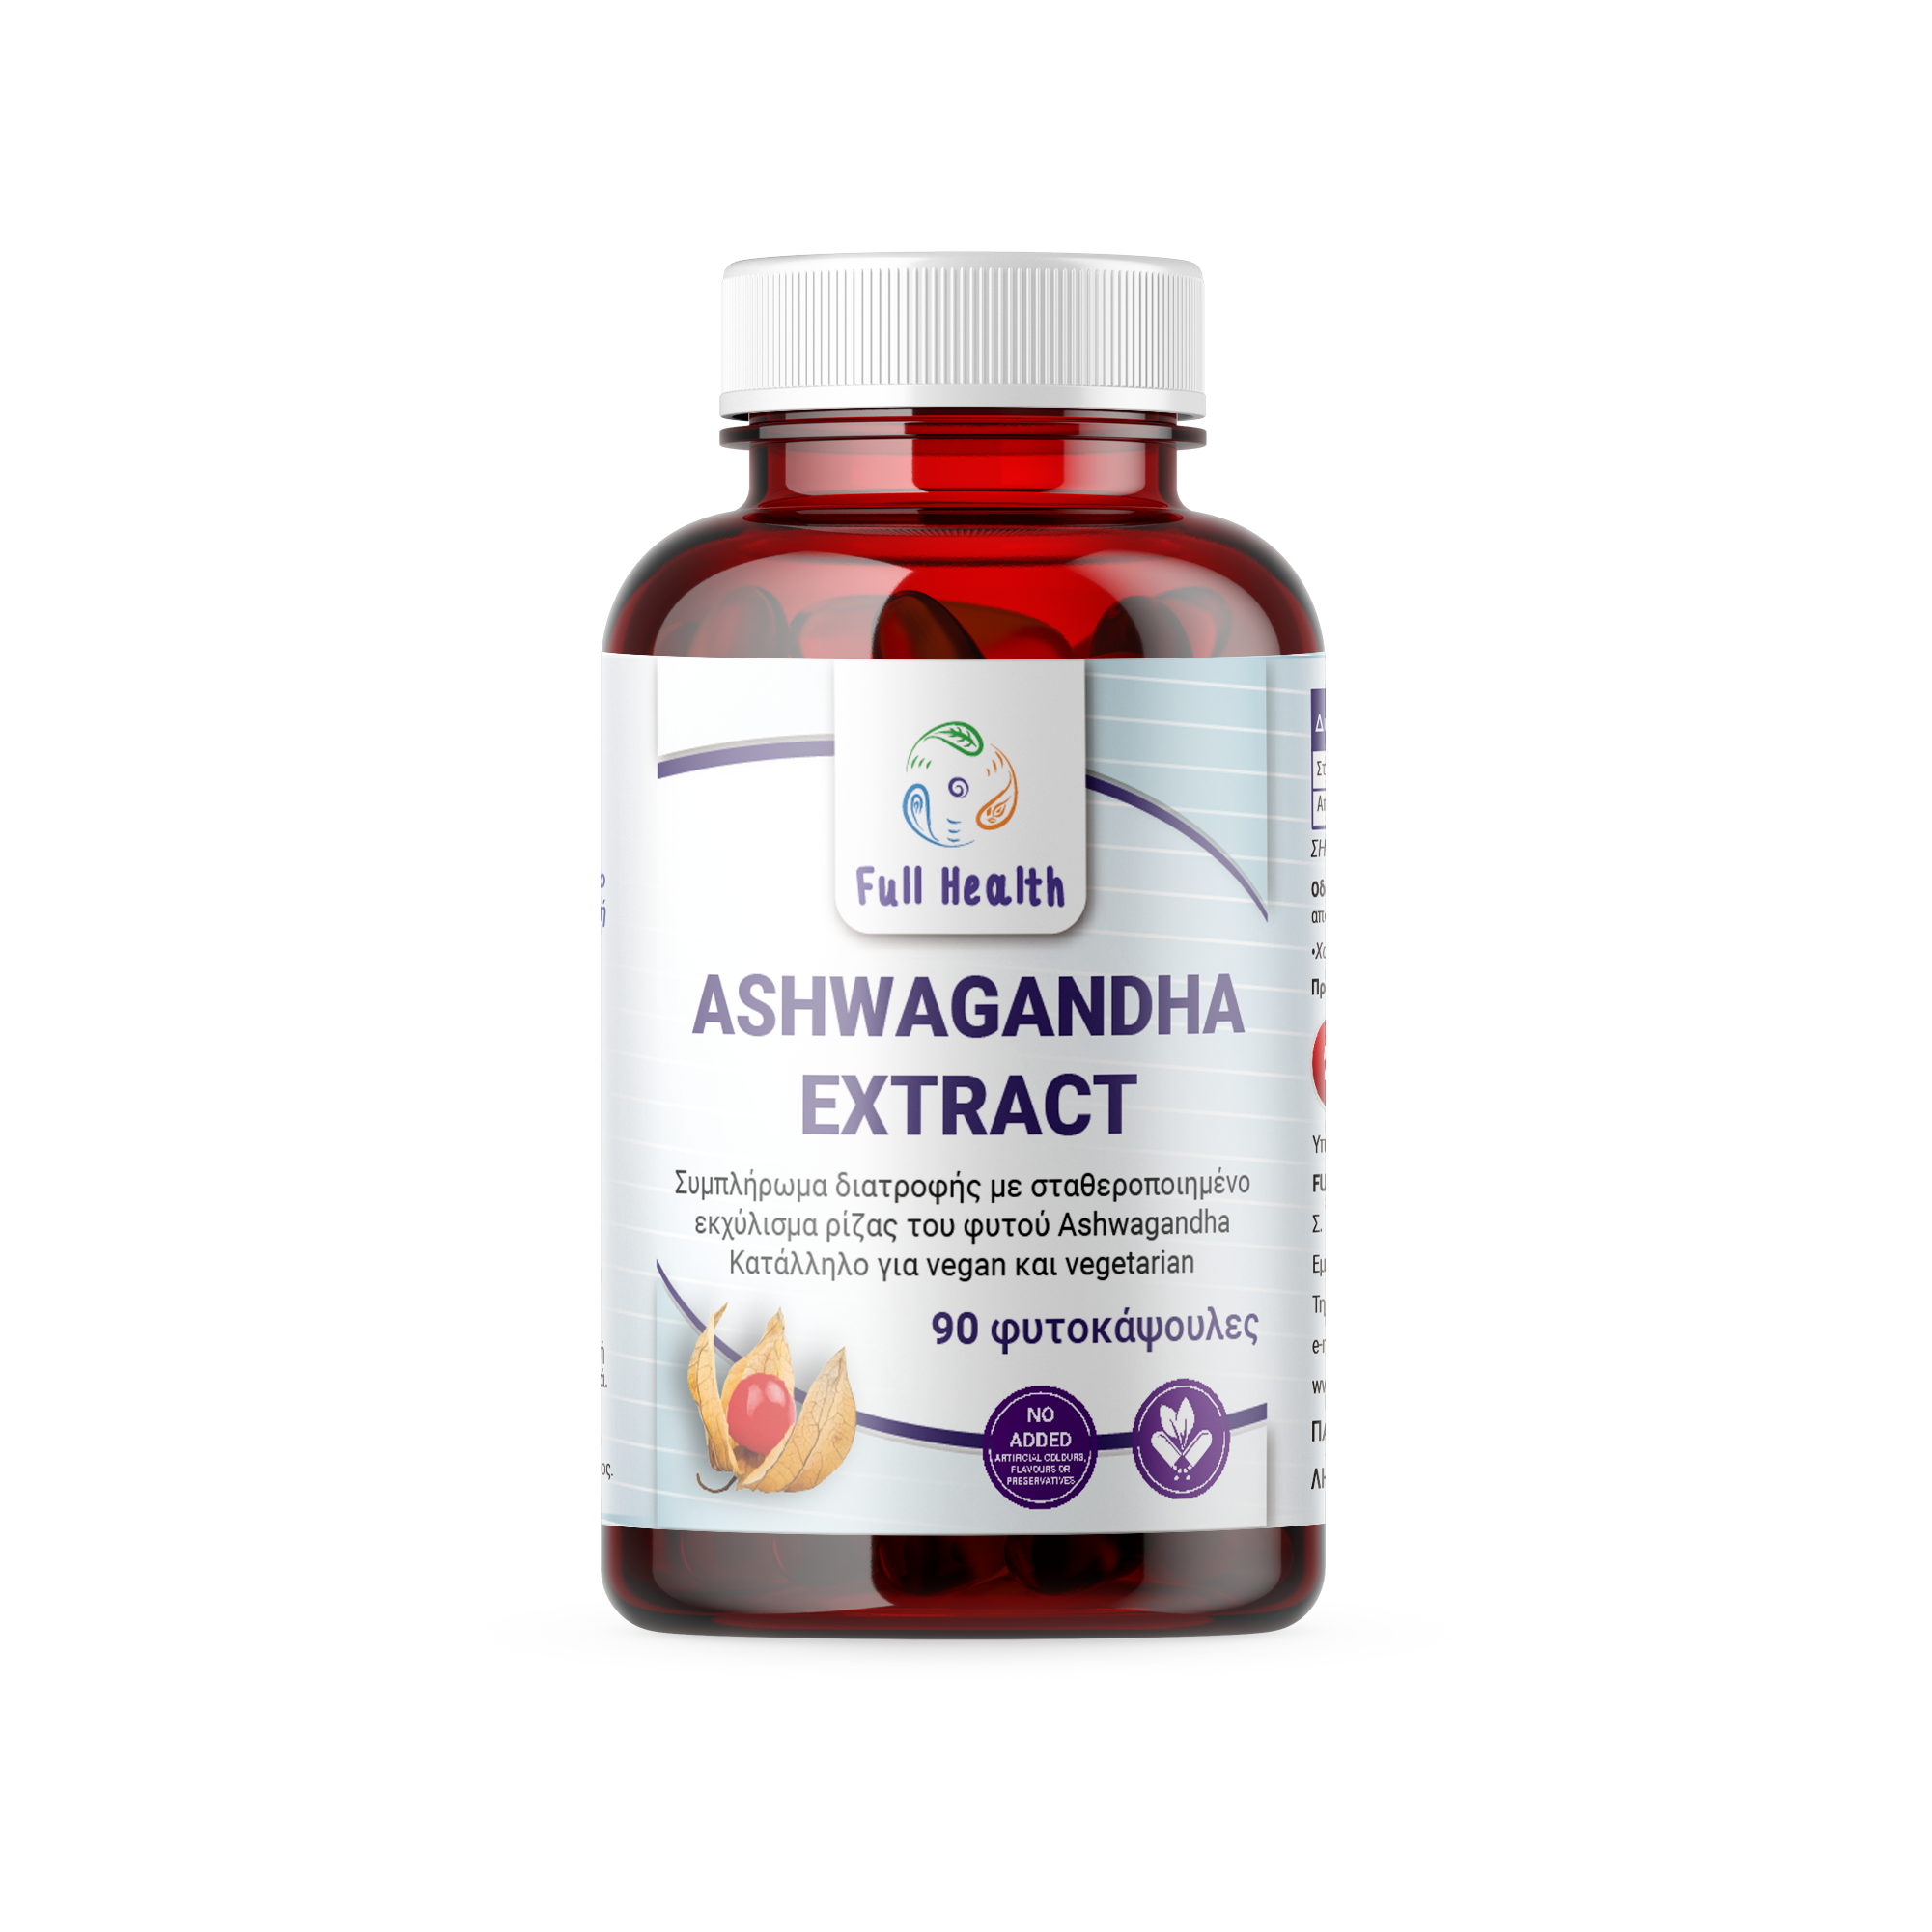 Full Health Ashwagandha Extract 230mg 90 Vcaps (Συμπλήρωμα διατροφής με σταθεροποιημένο εκχύλισμα από τη ρίζα ασβαγκάντα)